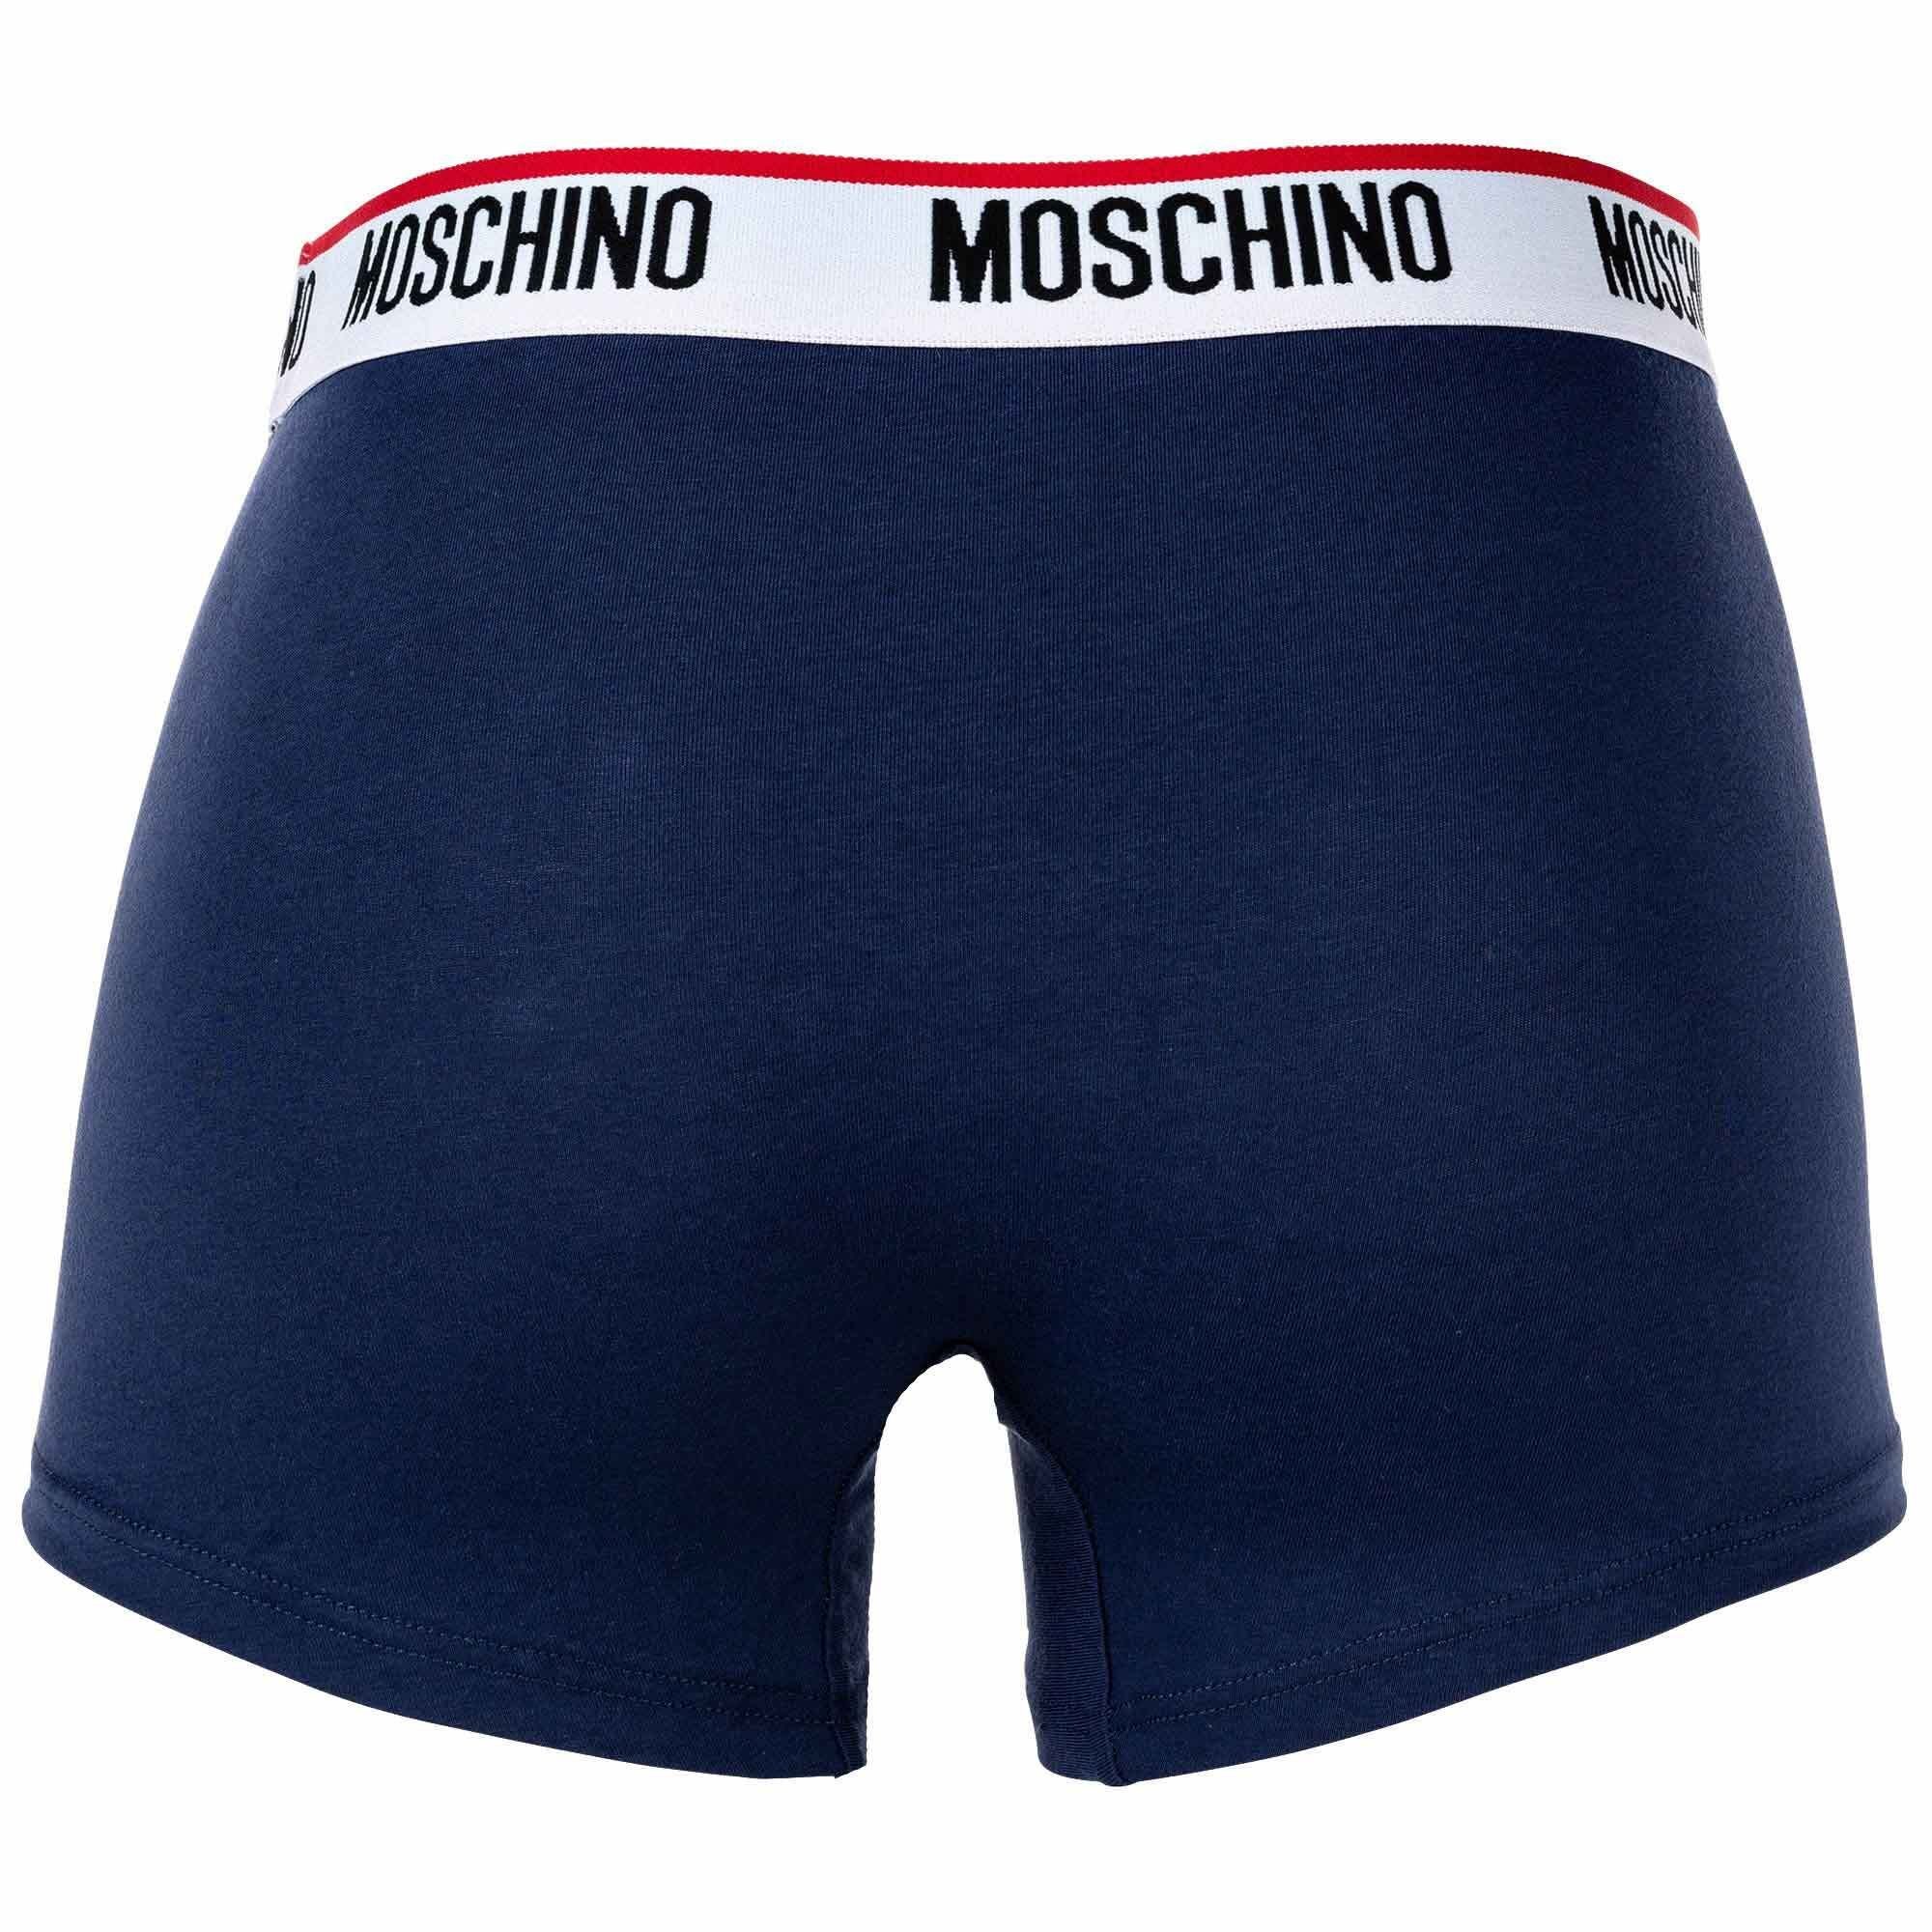 Moschino Herren Trunks 2er Boxershorts, Blau Unterhose Pack Boxer -